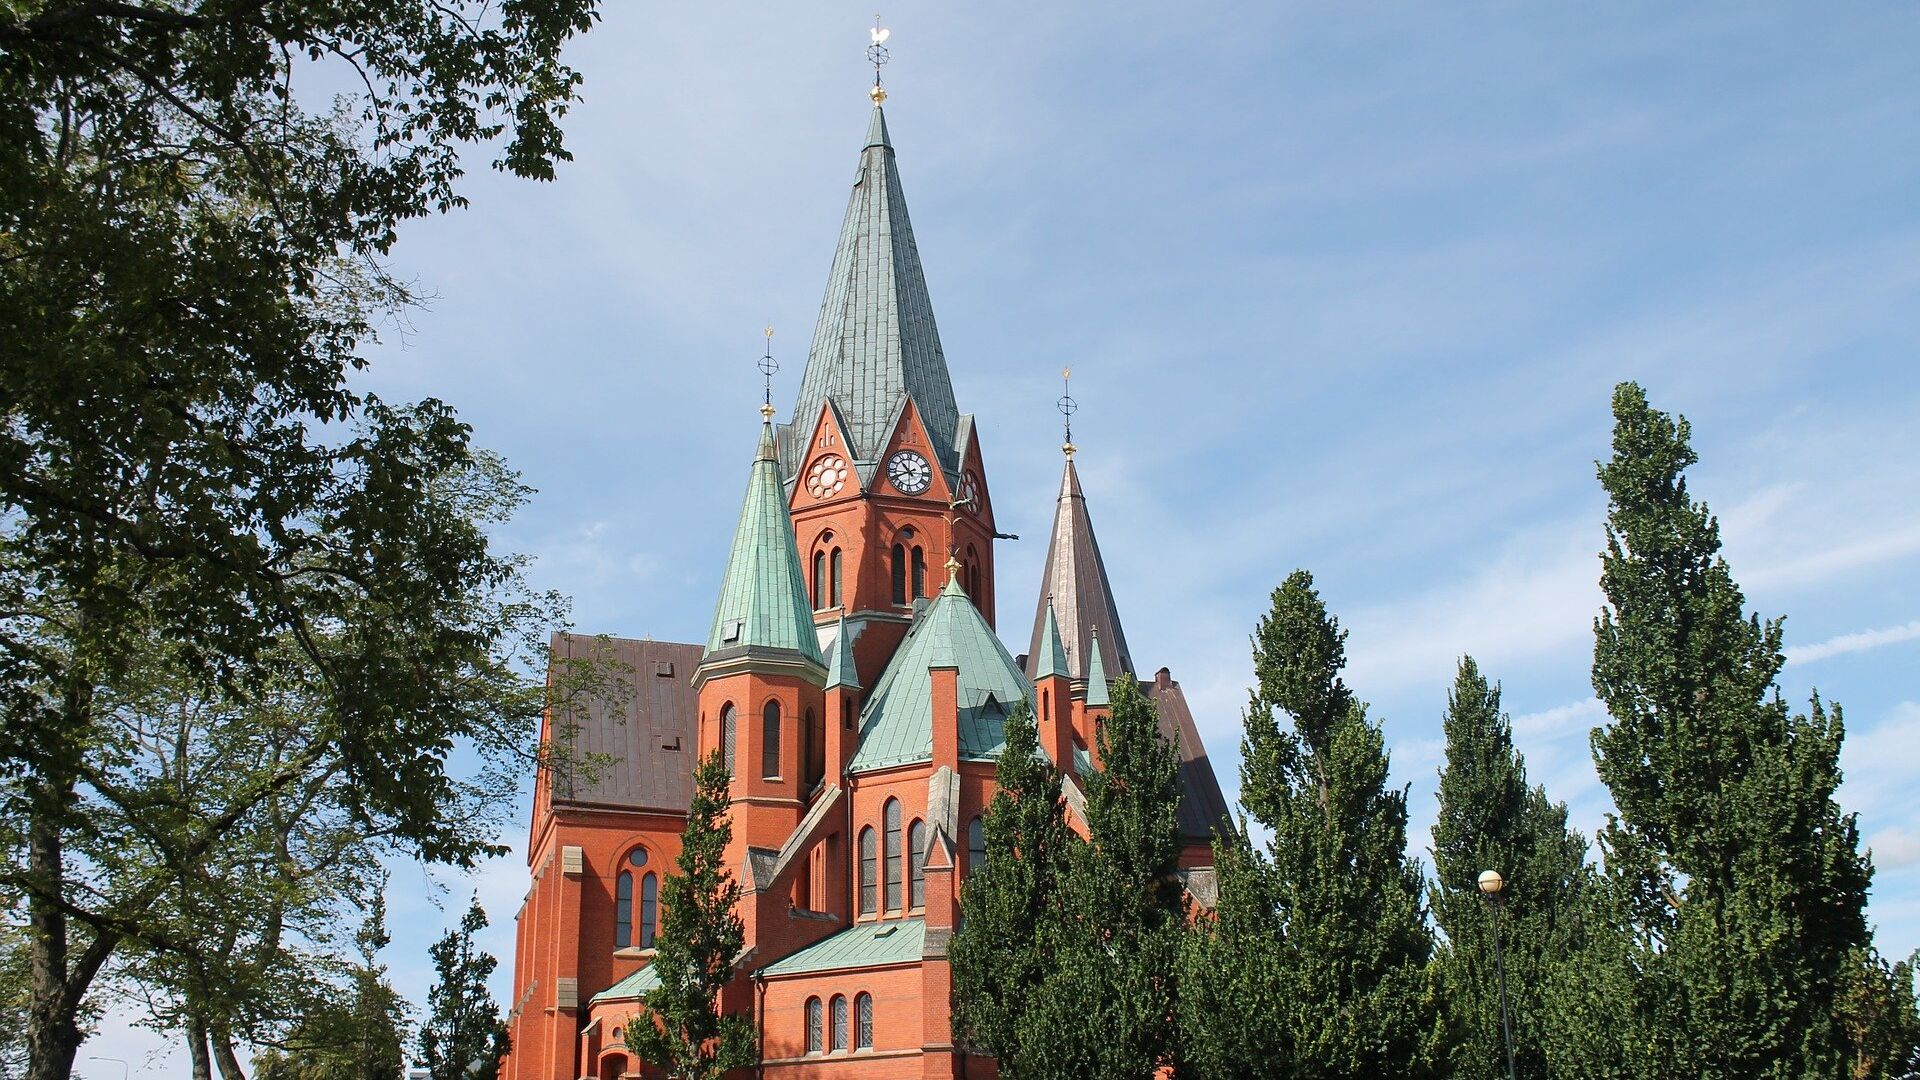 Church in Sweden - Sputnik International, 1920, 22.09.2022